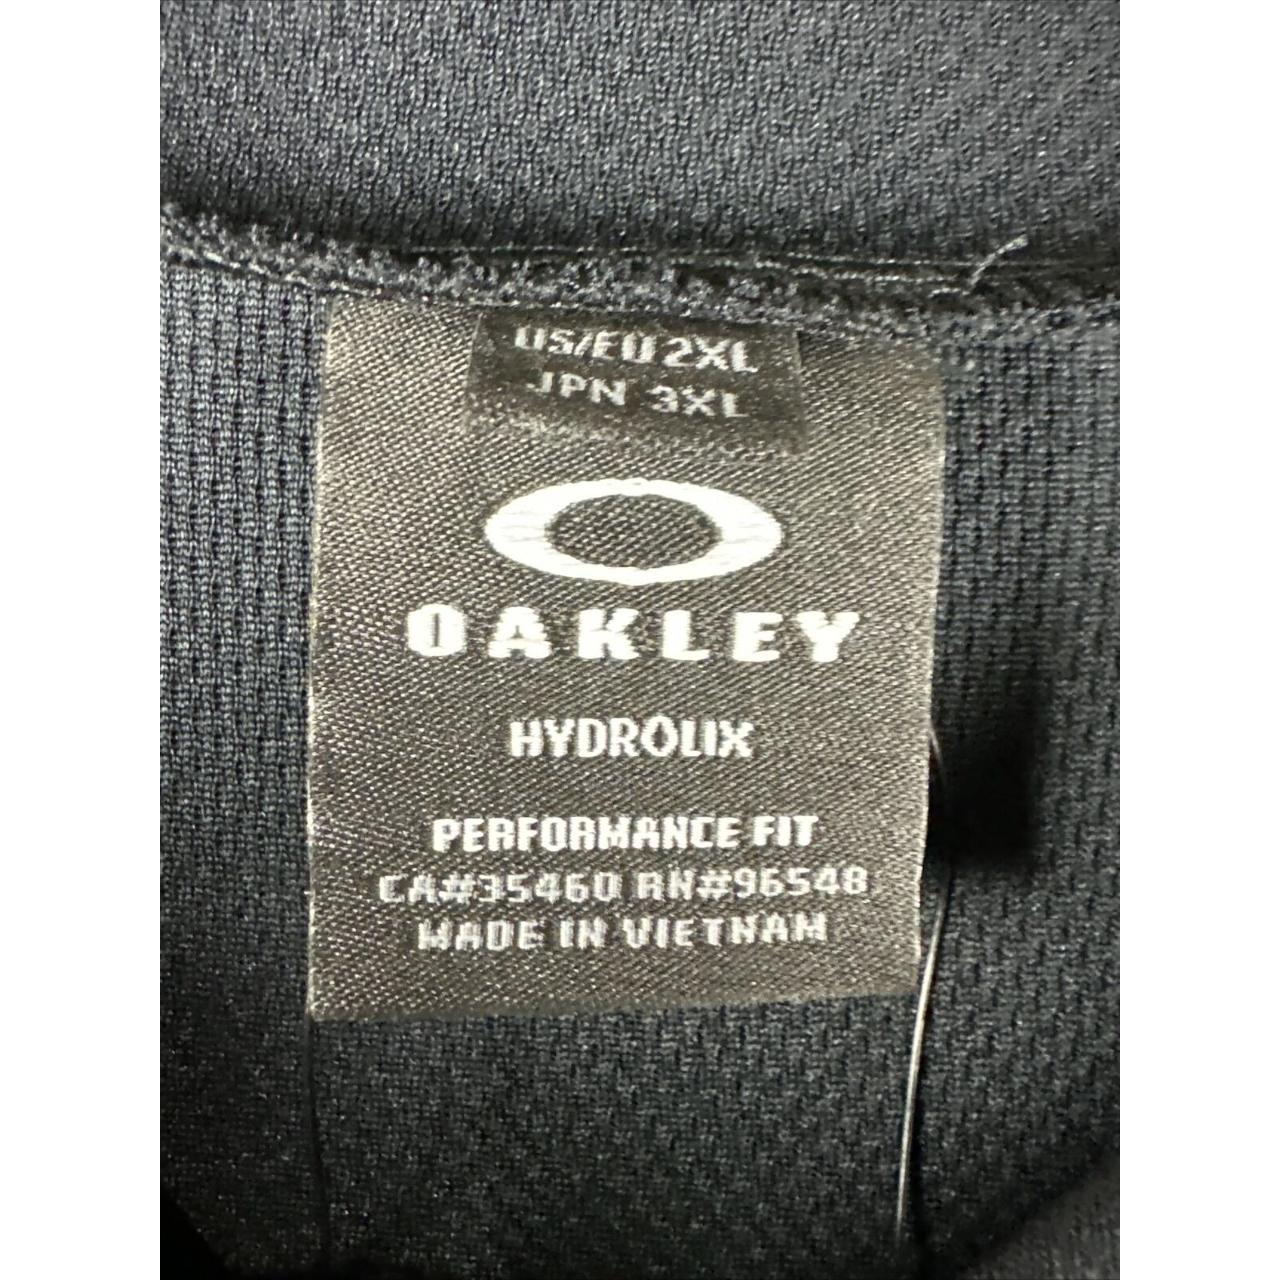 Oakley Matrix Print Rc Tee Promoção - Camiseta Branco